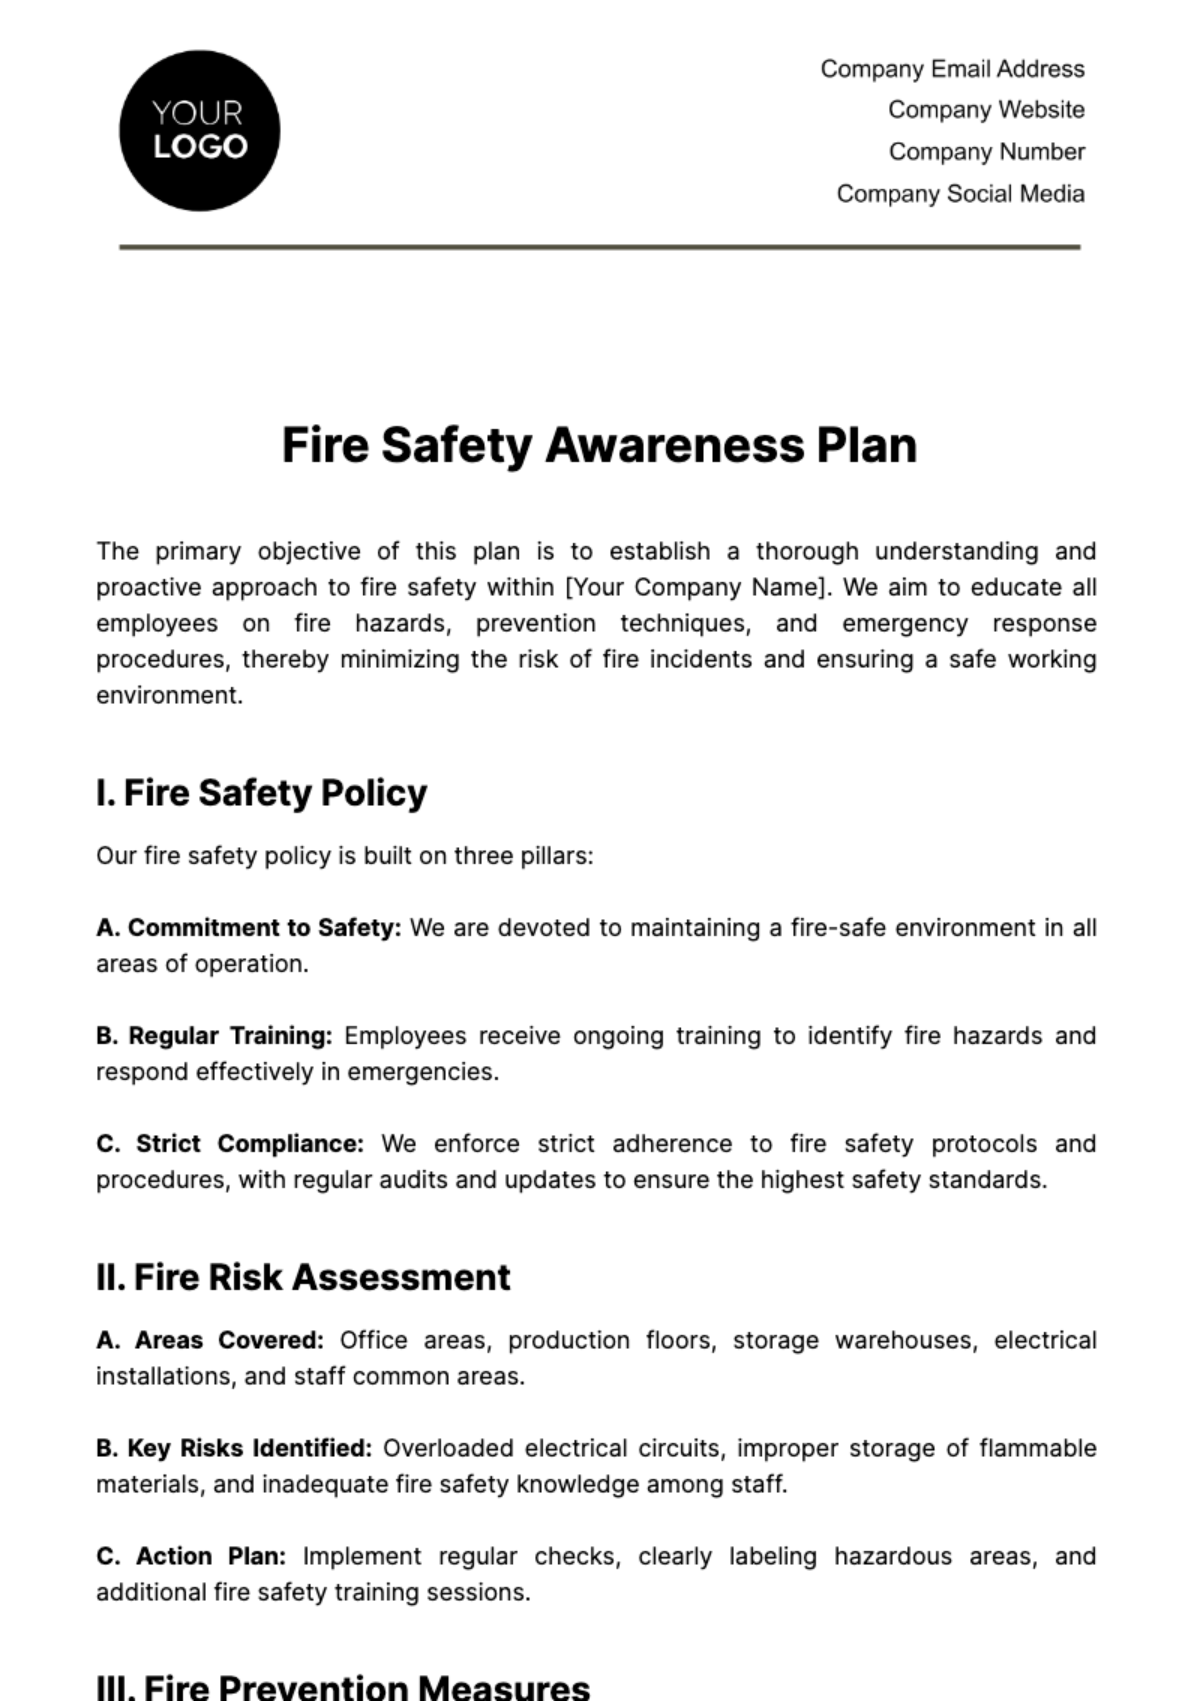 Fire Safety Awareness Plan Template